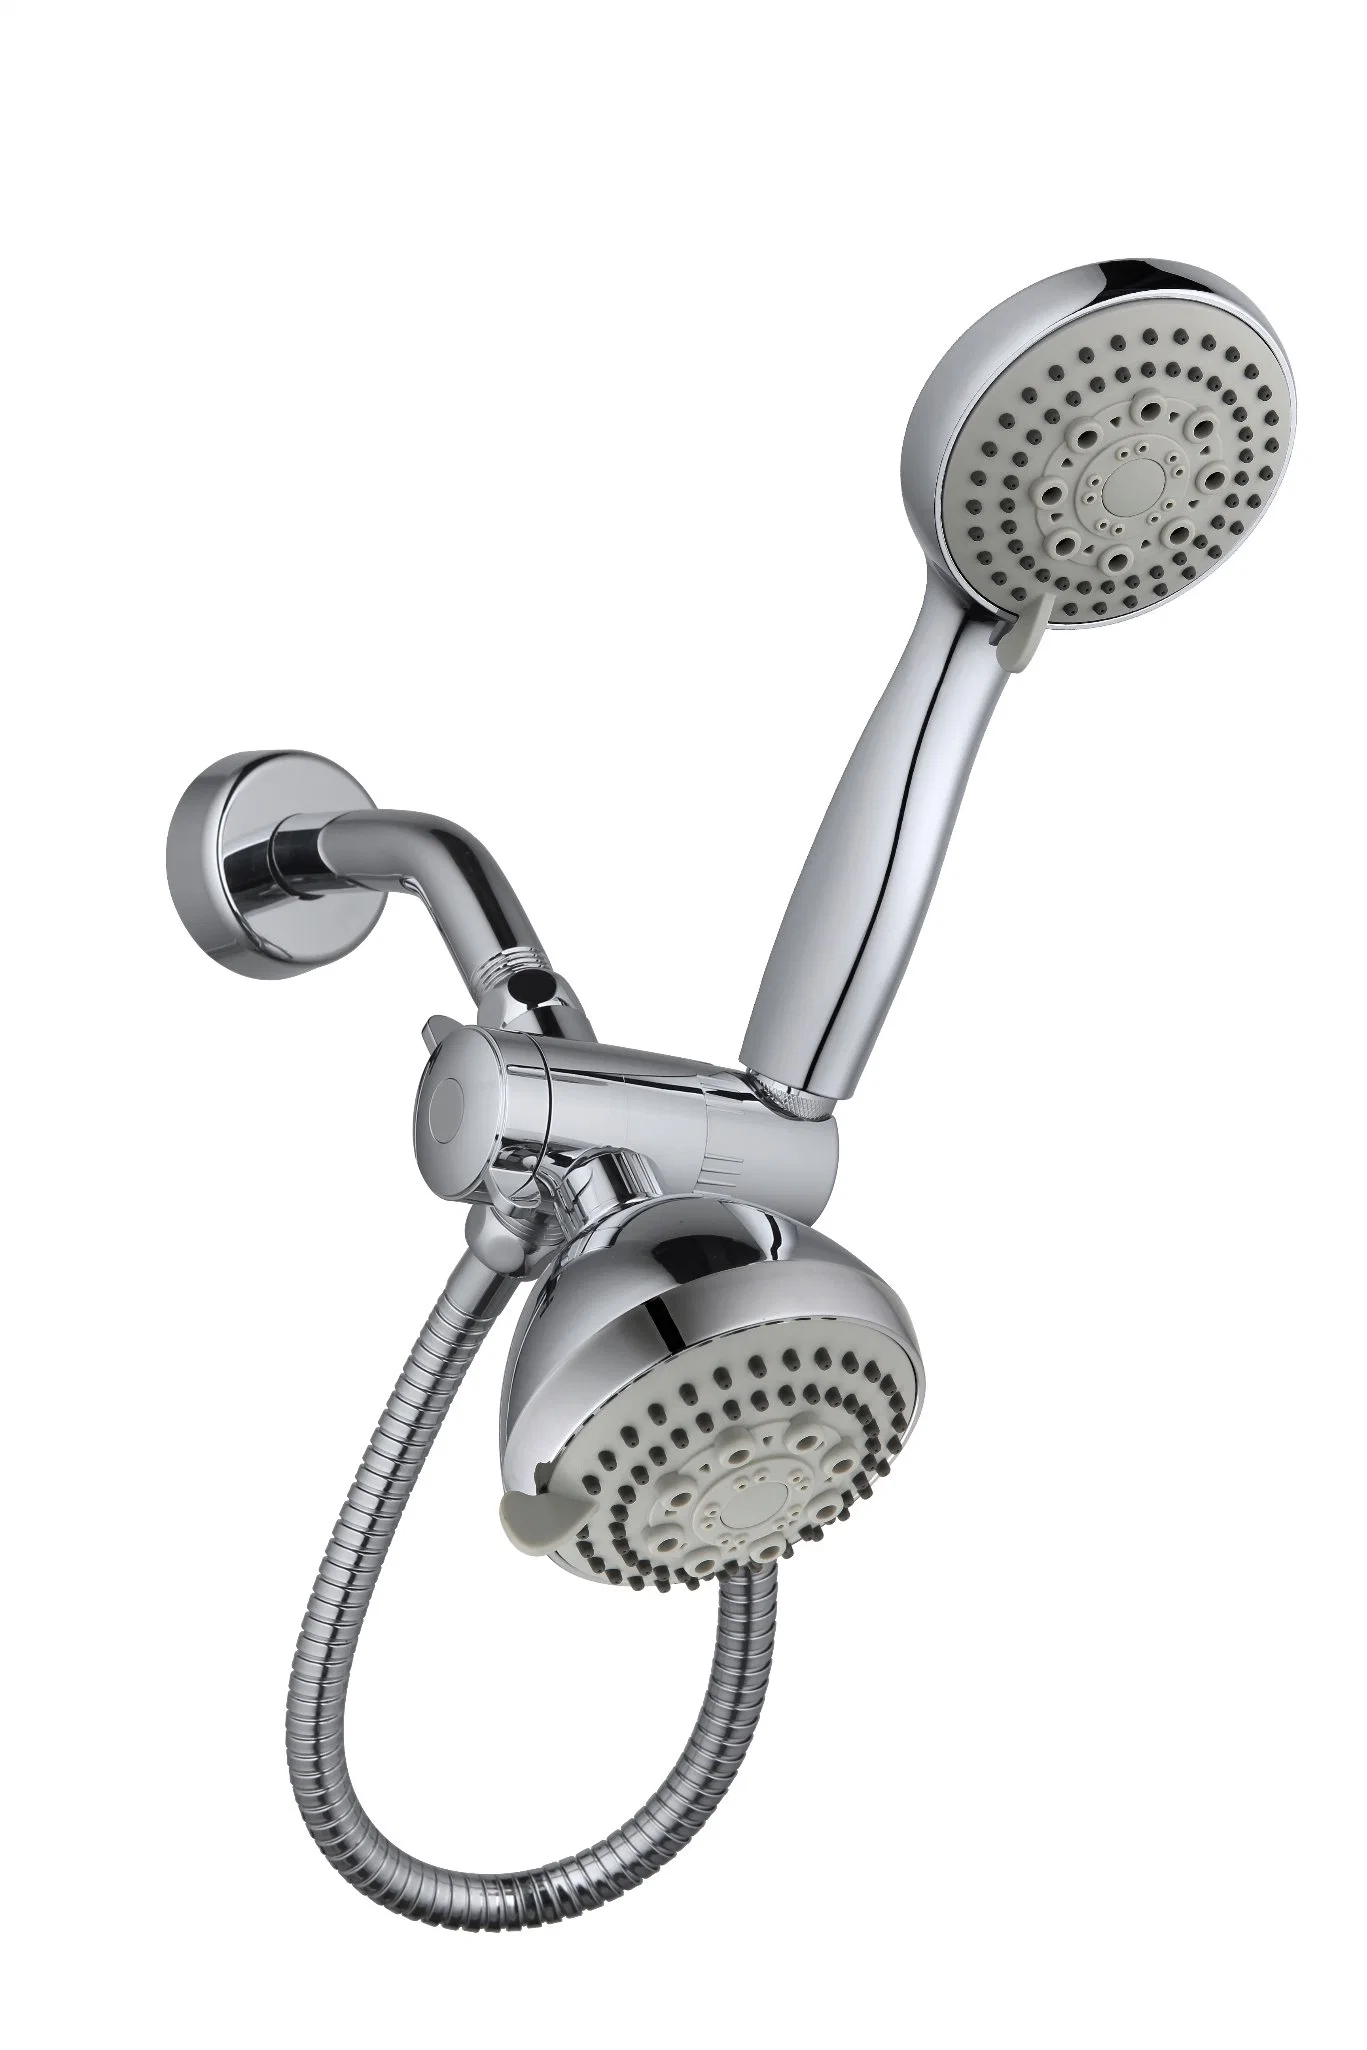 Hotelspa Bathroom Fixtures Shower Set with 5 Function Shower Head and Hand Shower Set, Metal Shower Arm, 3function Diverter E55003